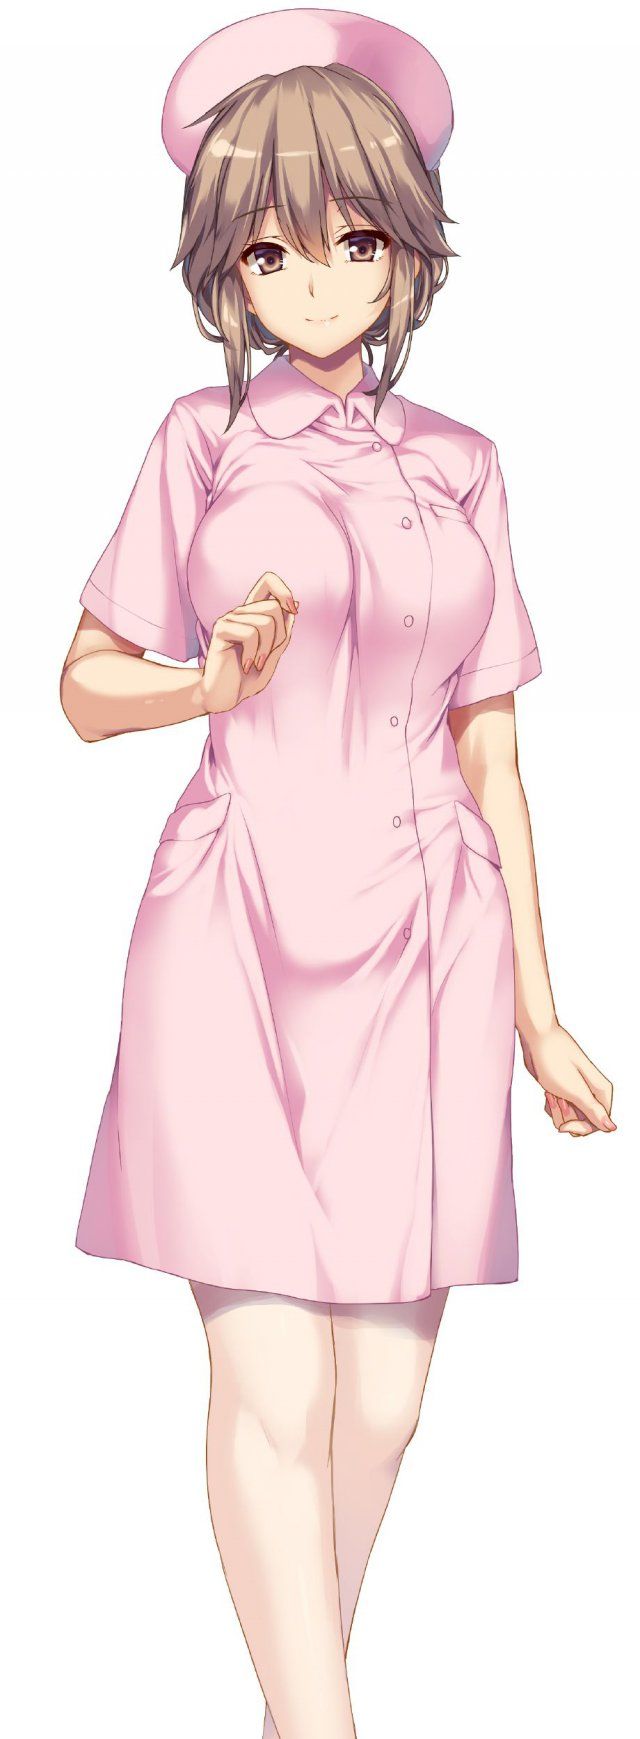 【Secondary】Nurse / Female Doctor [Image] Part 3 34